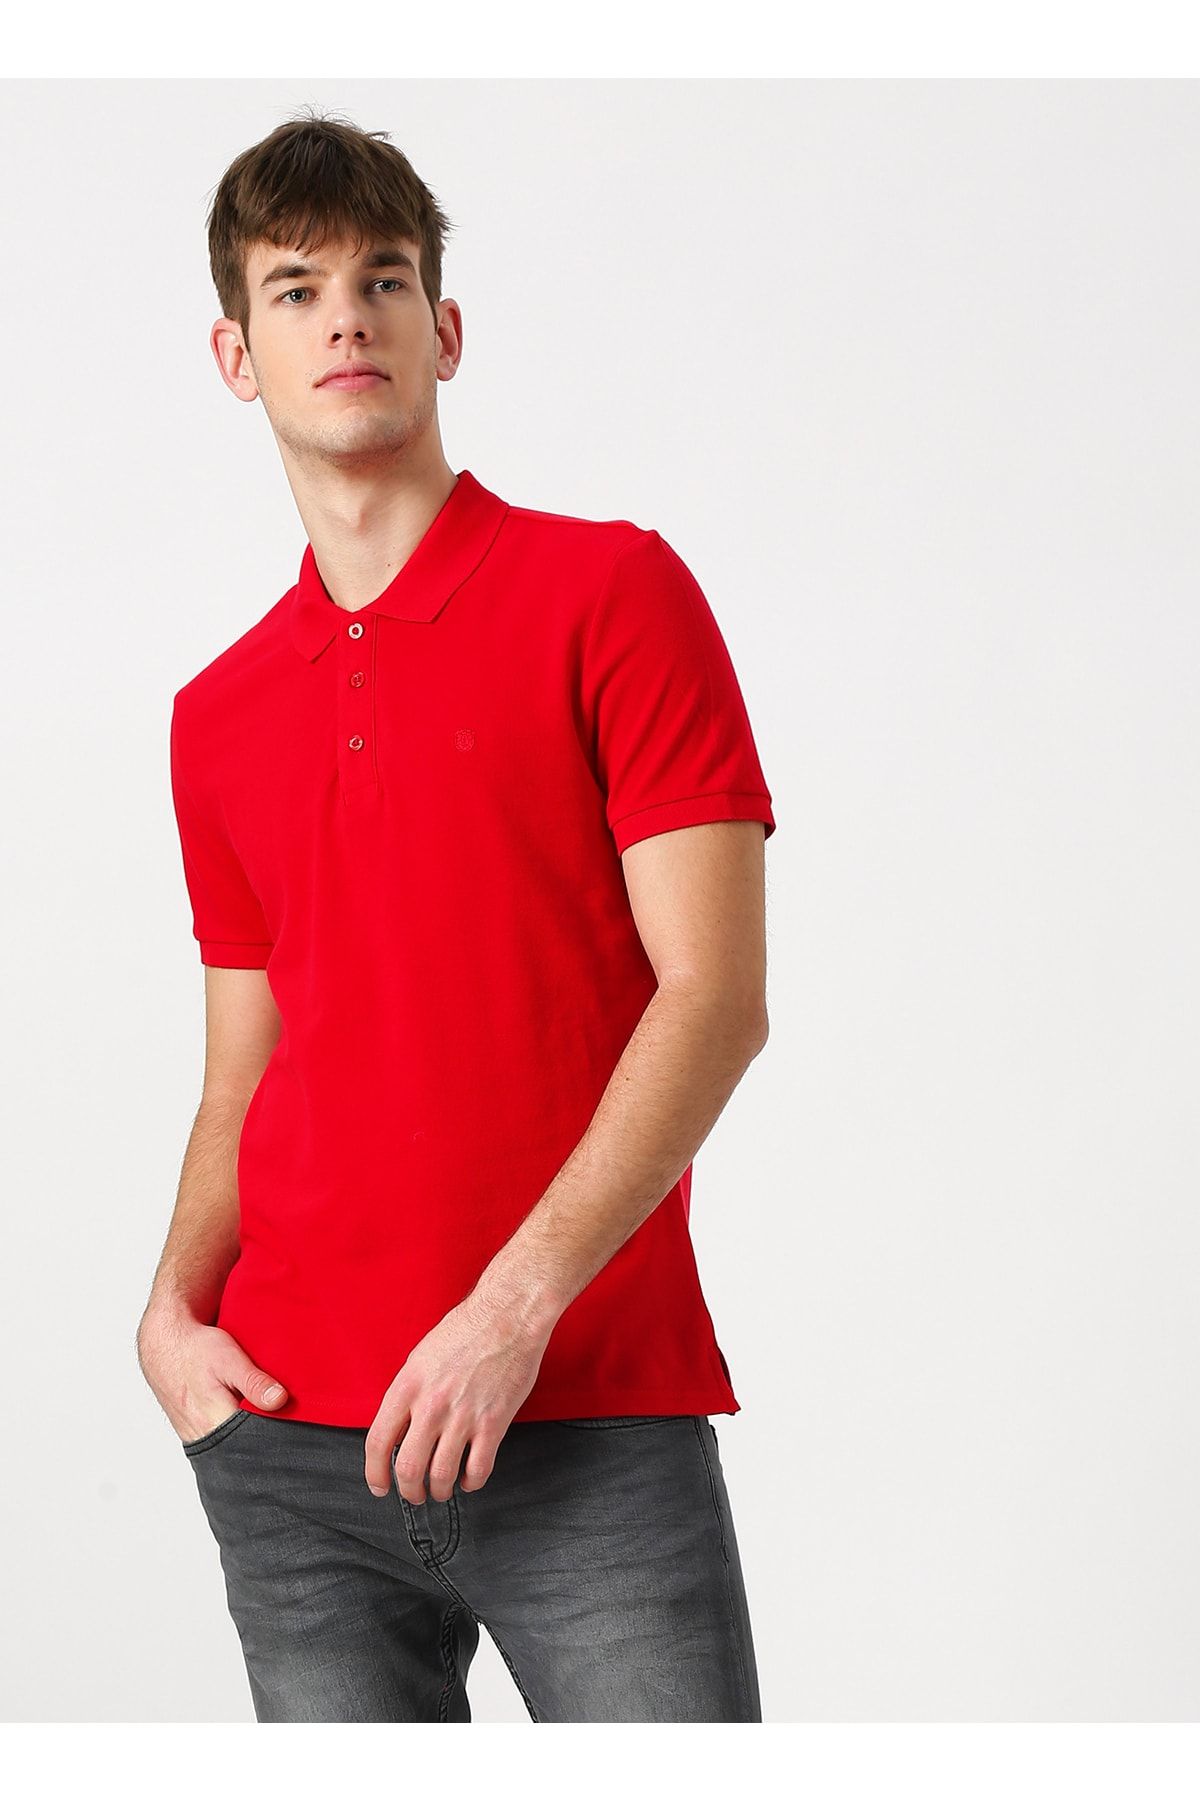 LİMON COMPANY Limon Kısa Kollu Kırmızı Erkek Polo T-shirt